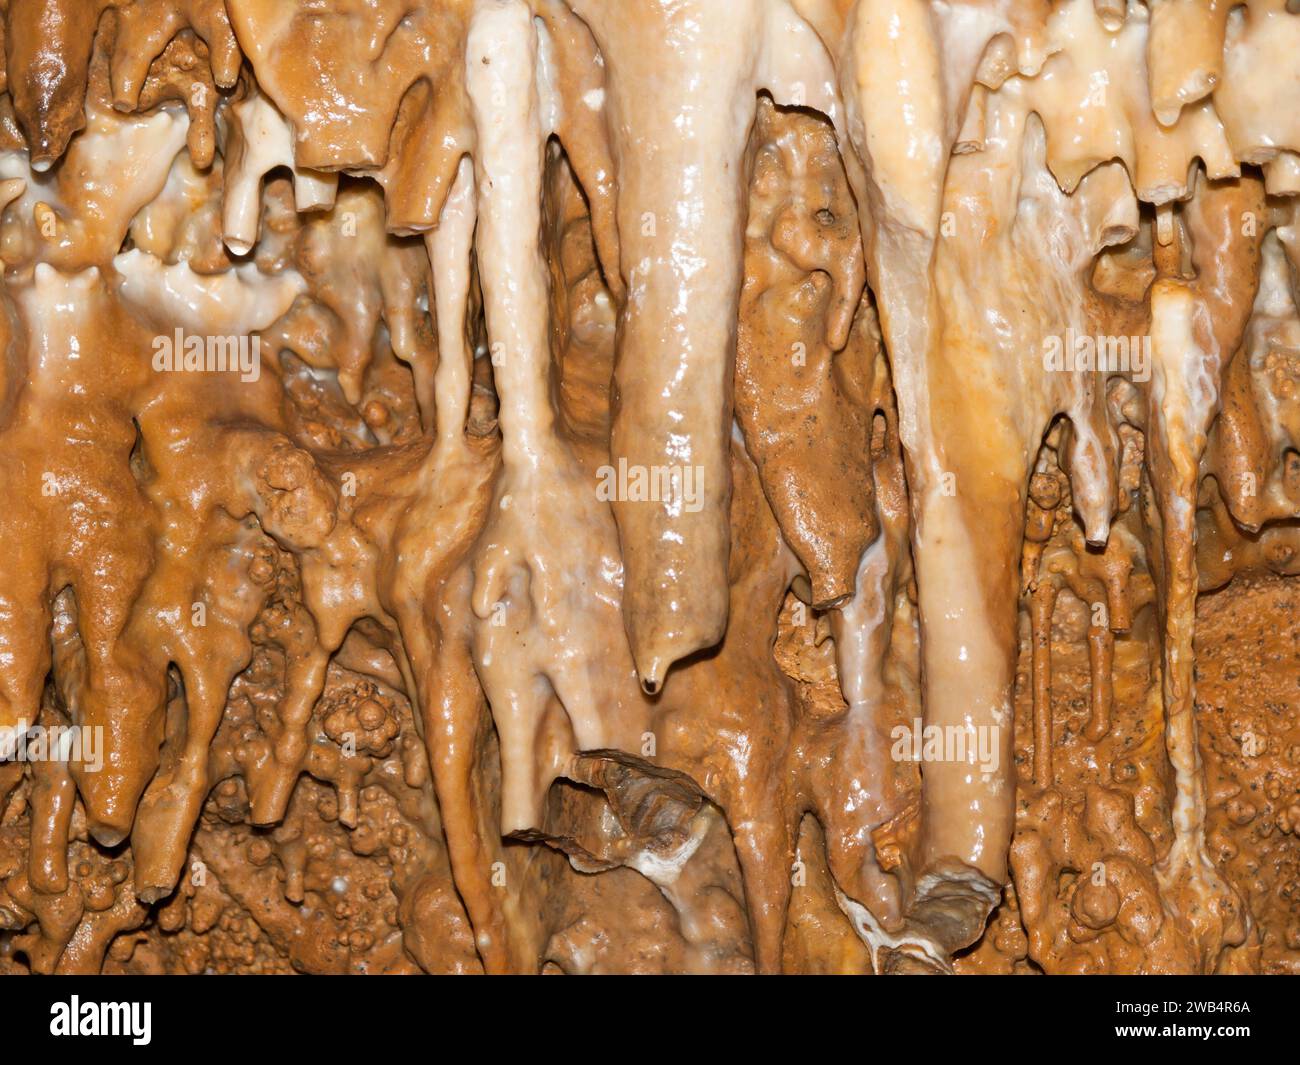 Limestone stalactites and stalagmites in Koneprusy caves, Czech republic Stock Photo